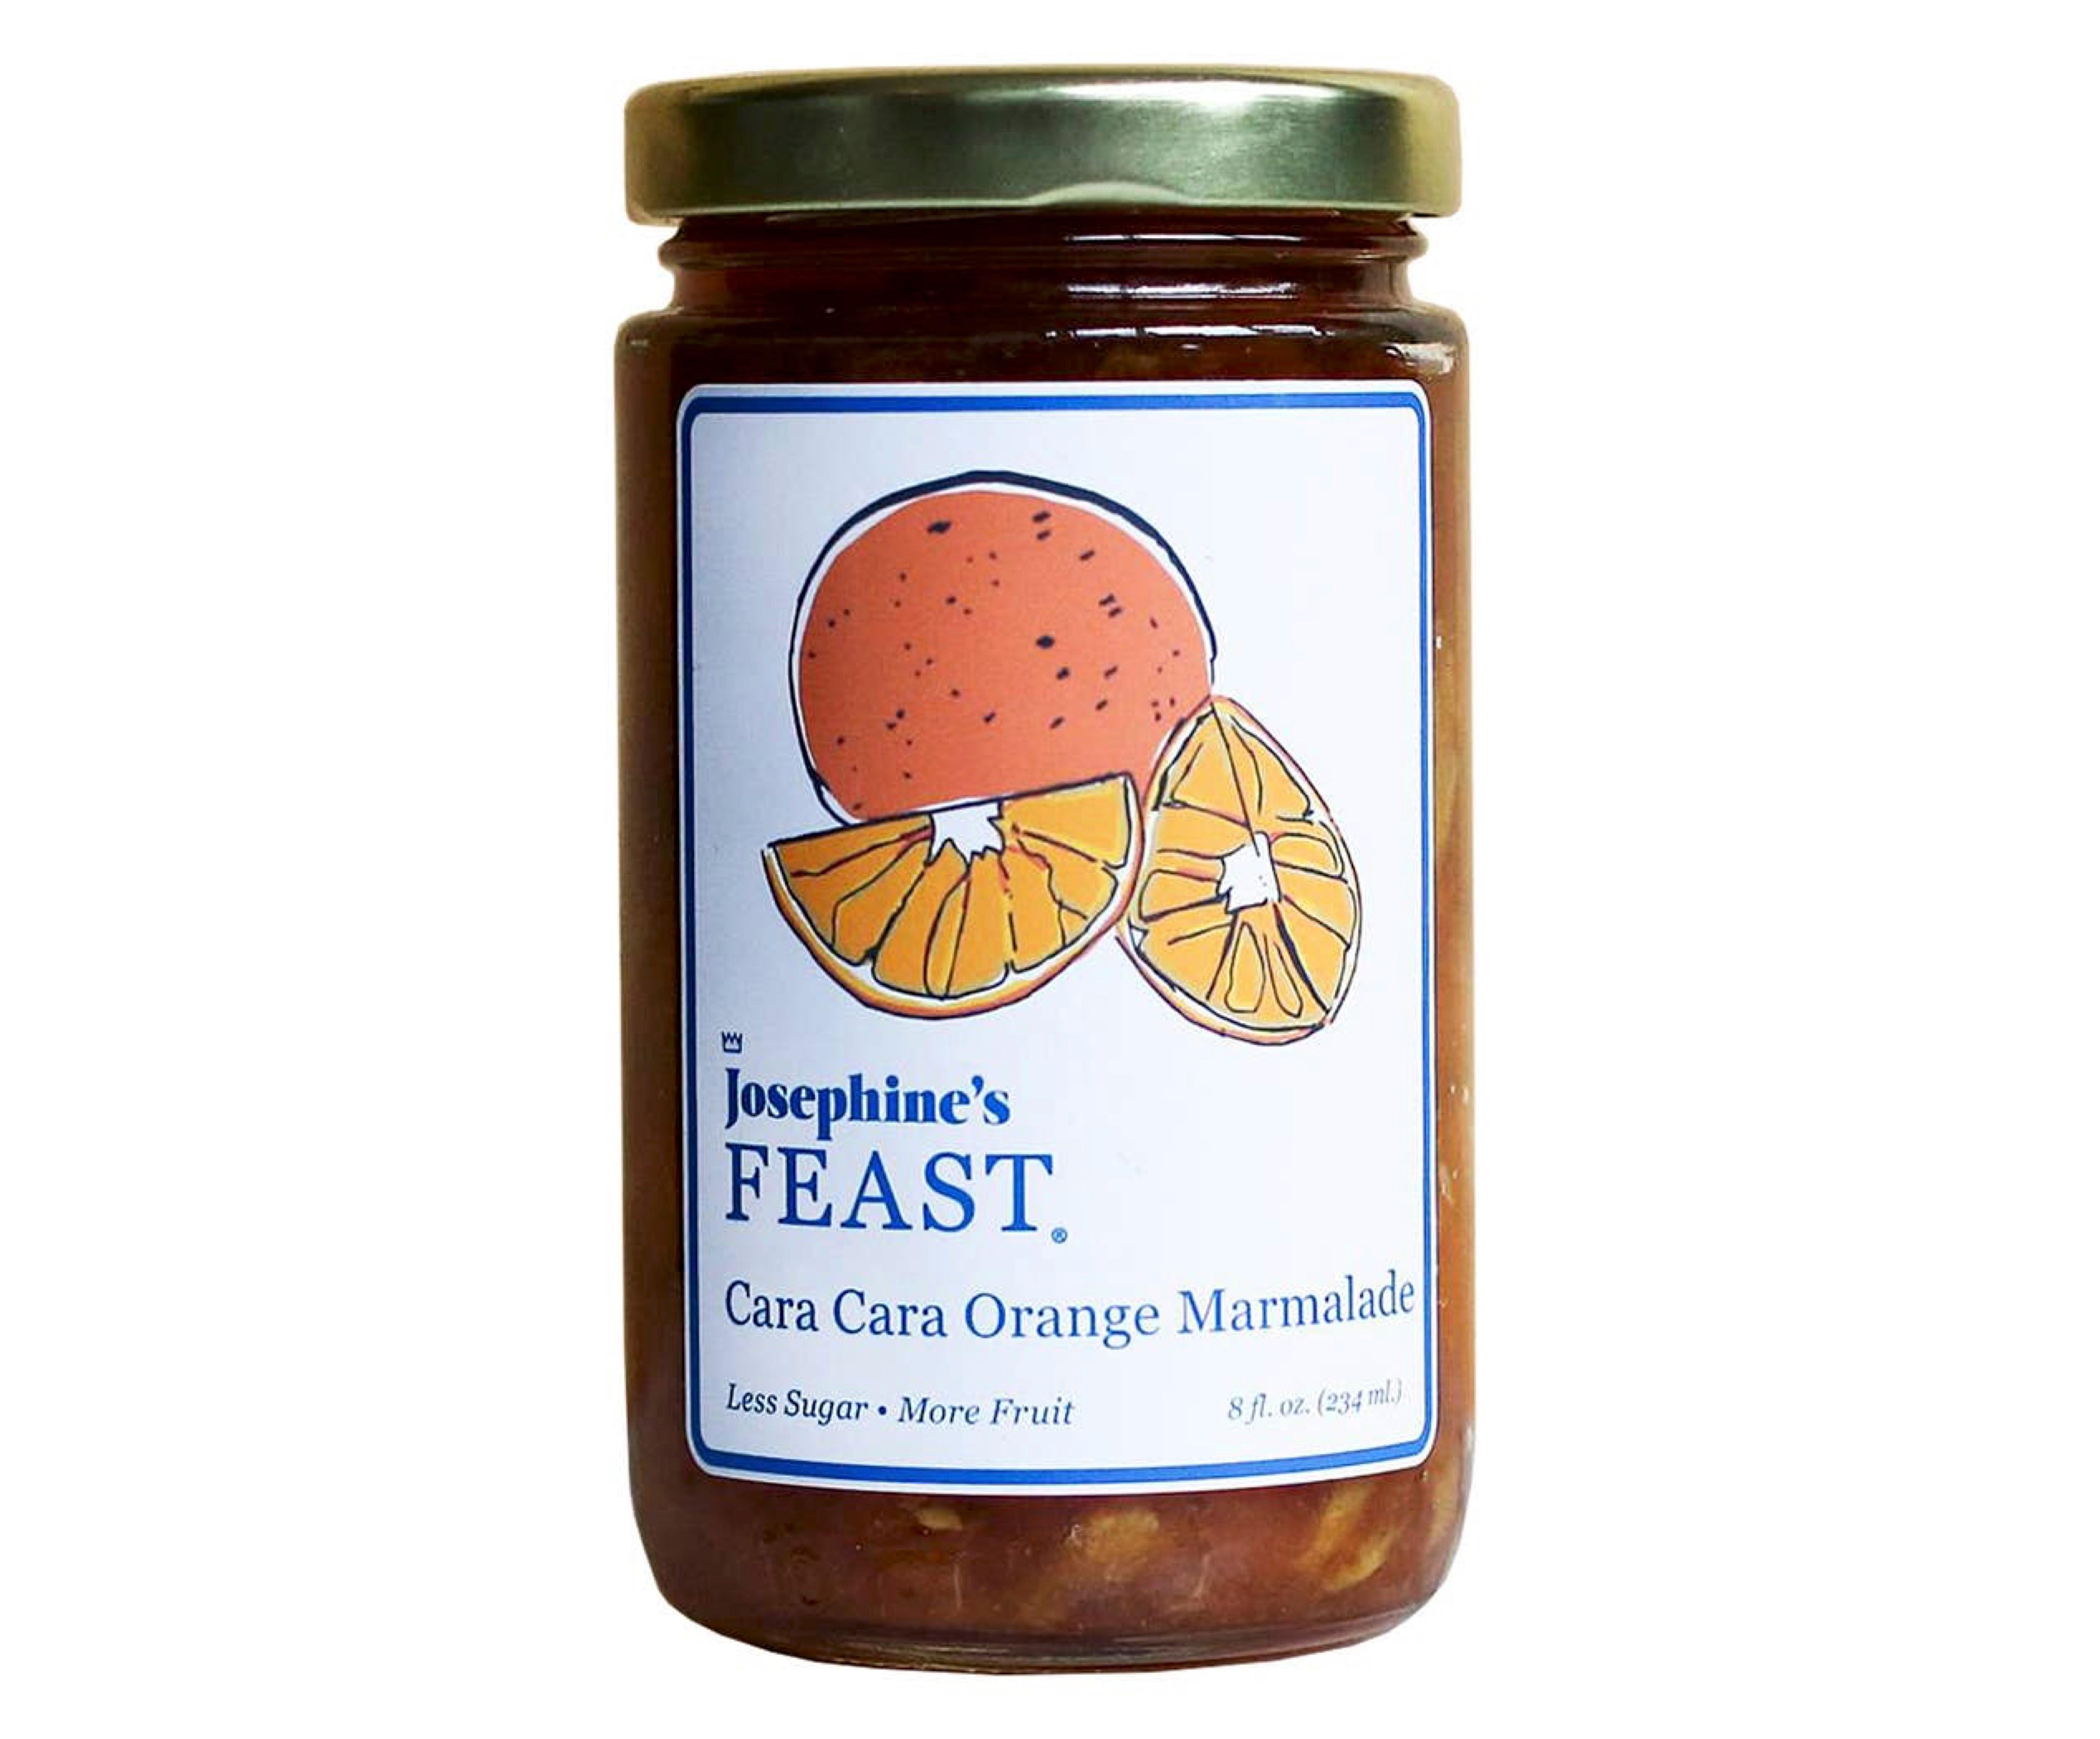 Josephine's Feast - Cara Cara Orange Marmalade